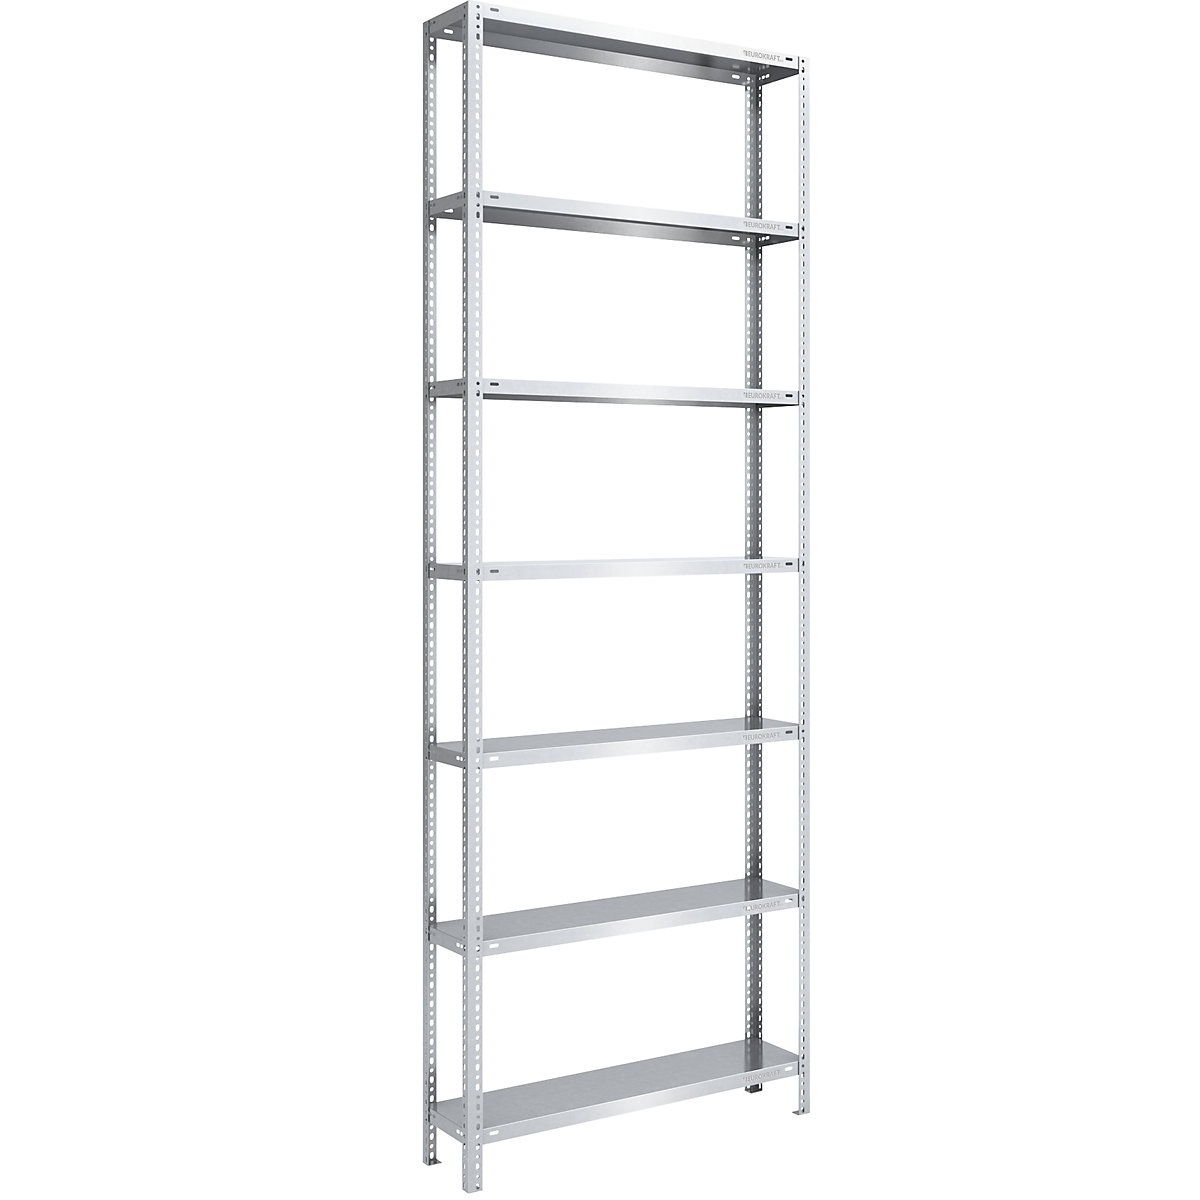 Bolt-together shelf unit, light duty, zinc plated – eurokraft pro, shelf unit height 3000 mm, shelf width 1000 mm, depth 300 mm, standard shelf unit-5